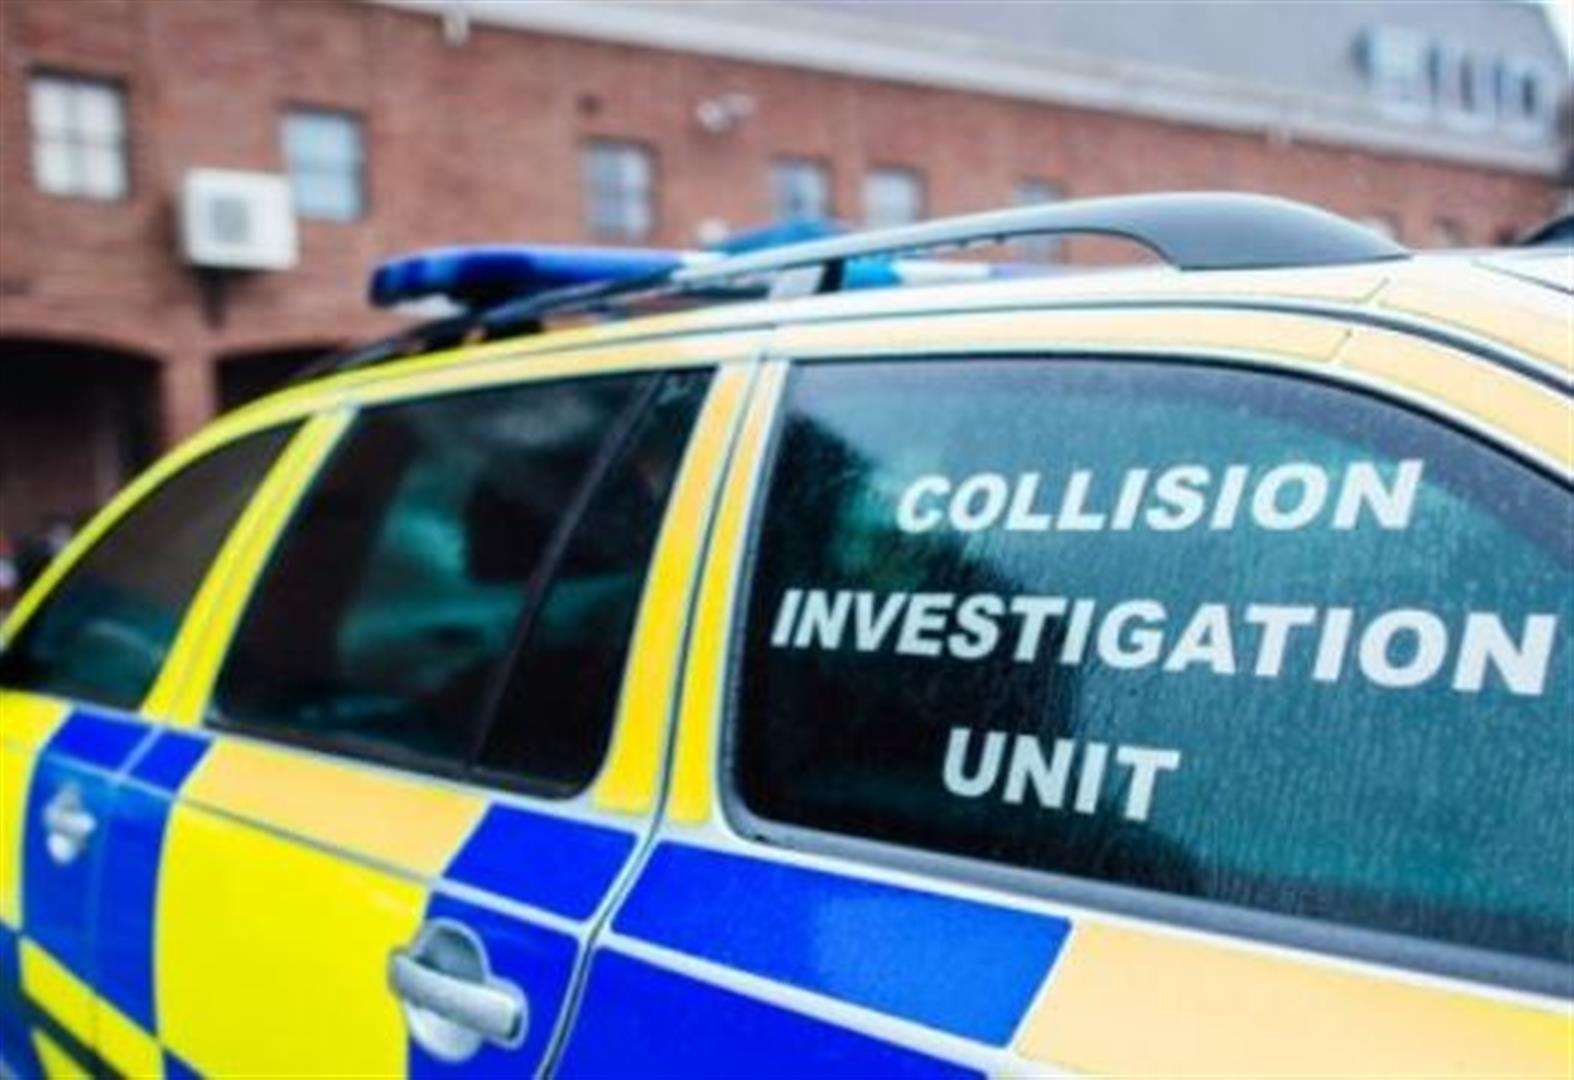 Kent Police collision investigation unit - Stock Image (2747256)